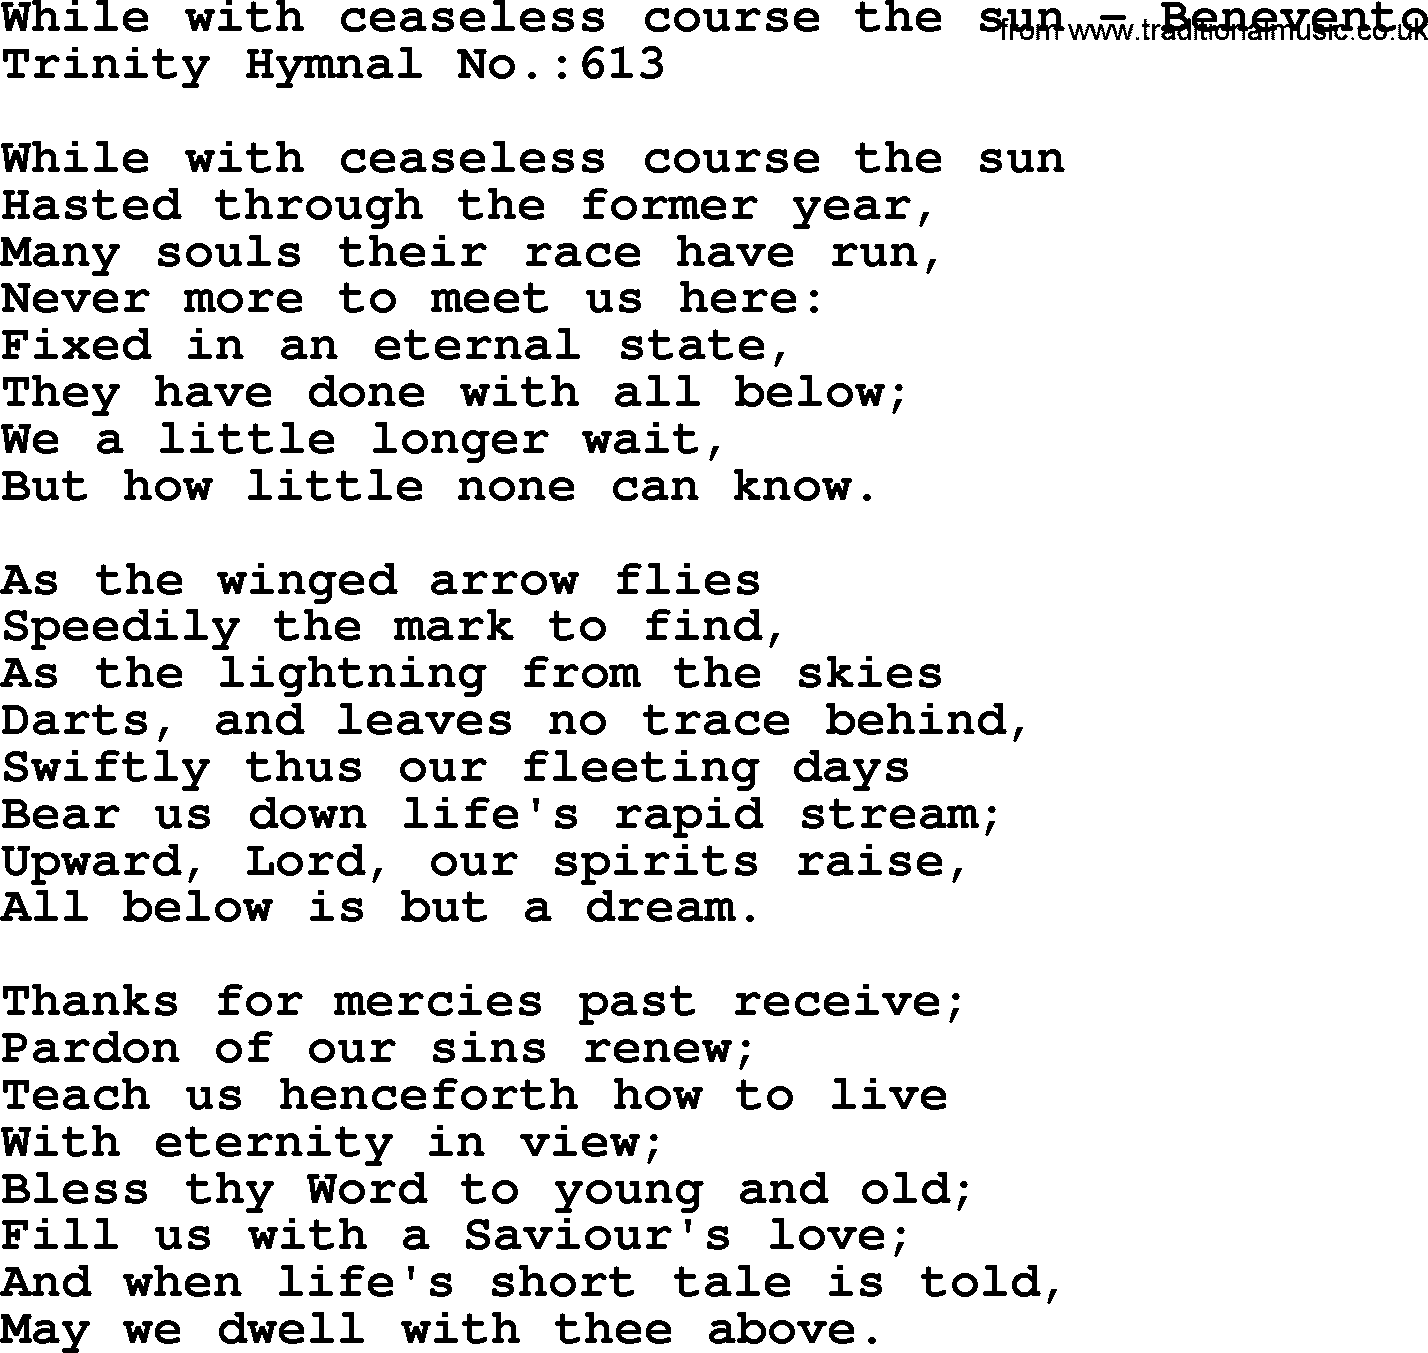 Trinity Hymnal Hymn: While With Ceaseless Course The Sun--Benevento, lyrics with midi music